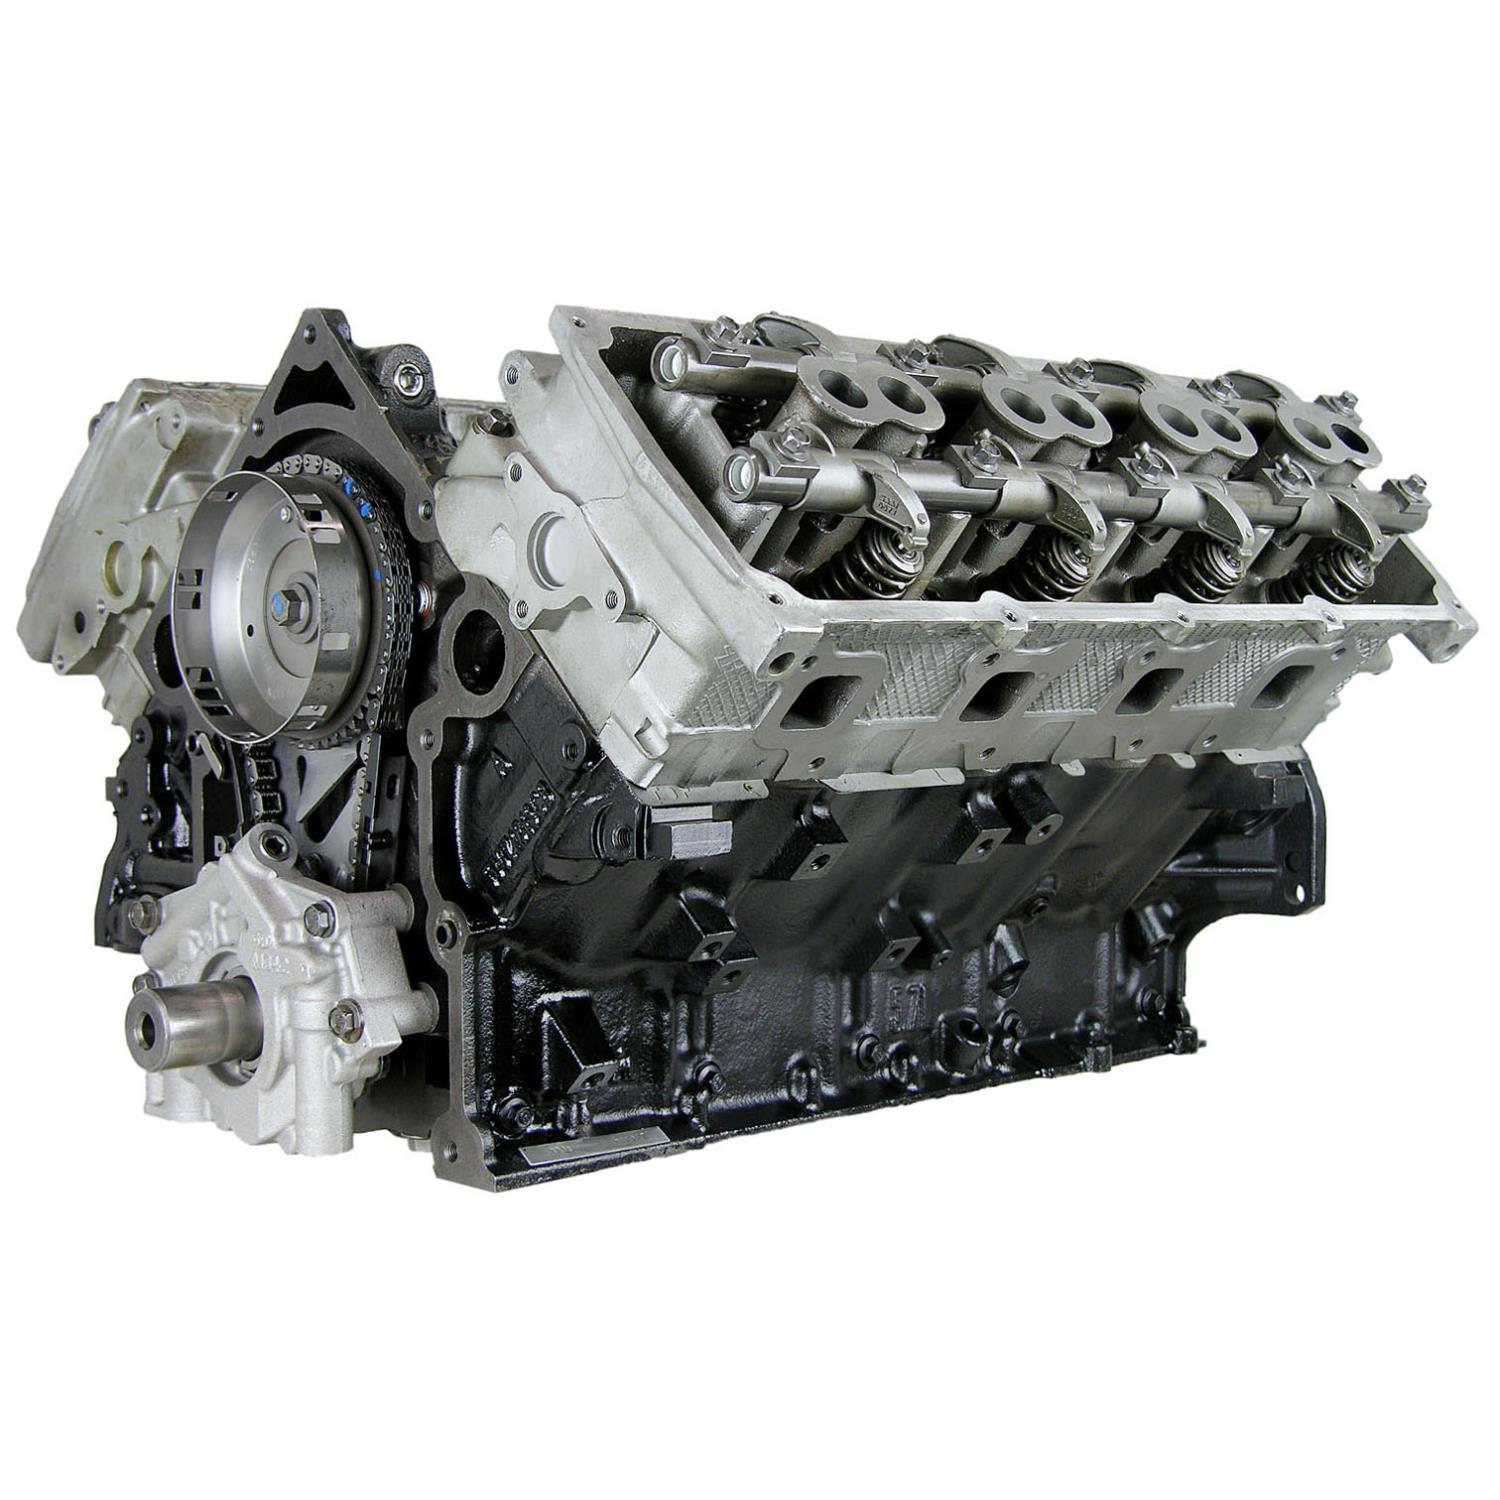 HP103T High Performance Crate Engine 2003-2008 Chrysler Gen III HEMI 5.7L / 400HP / 400TQ